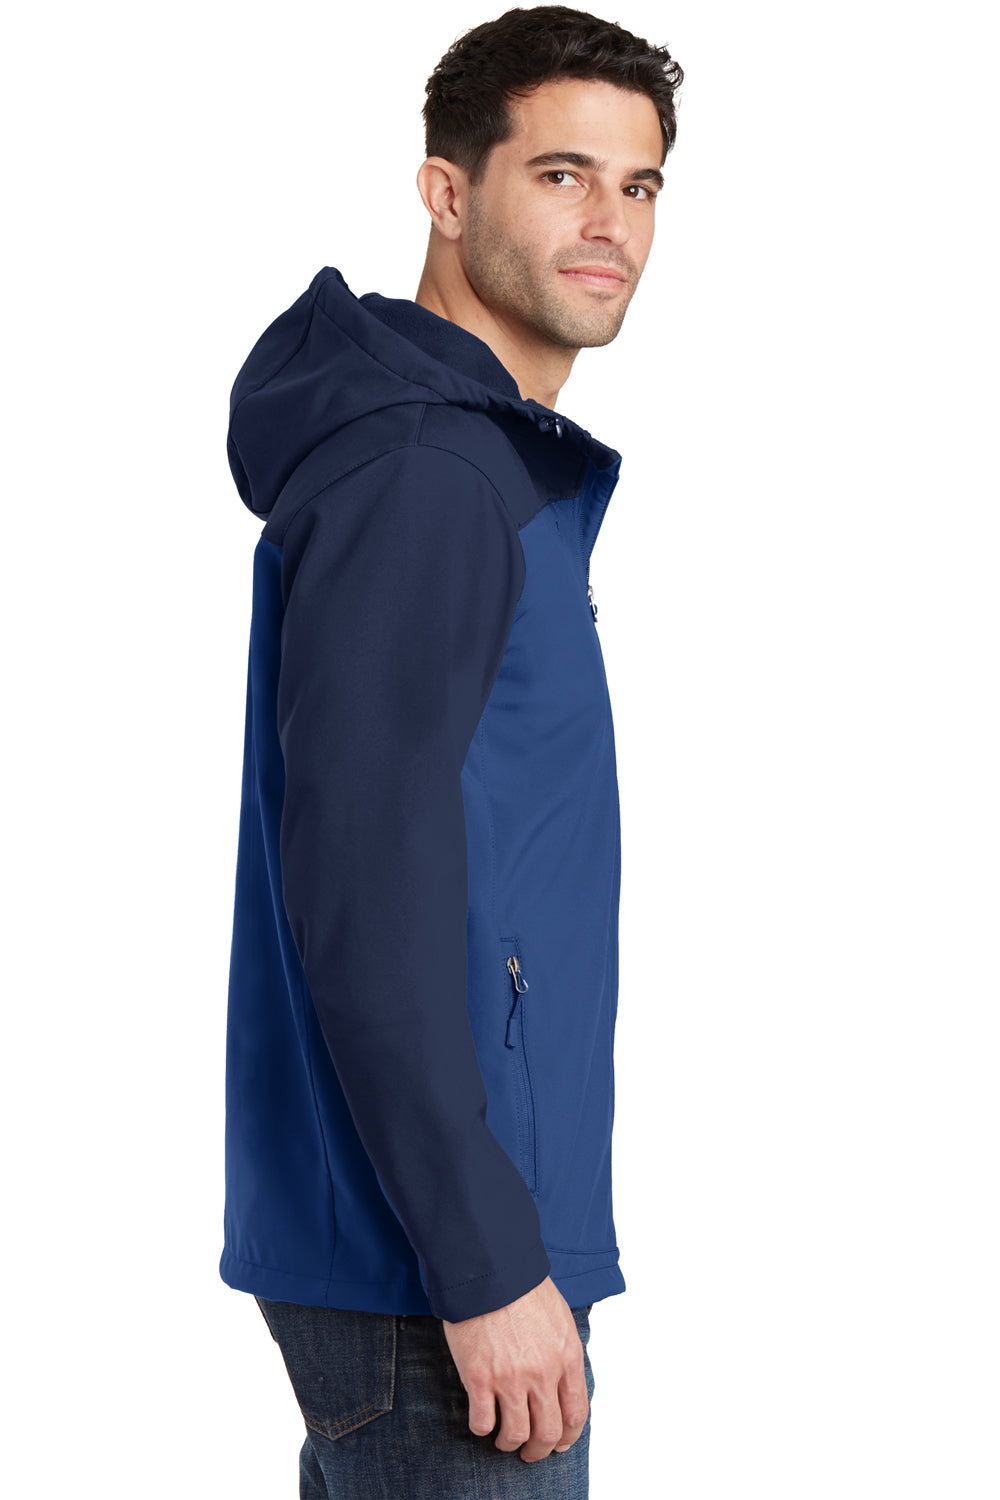 Port Authority J335 Mens Core Wind & Water Resistant Full Zip Hooded Jacket Royal Blue/Navy Blue Side